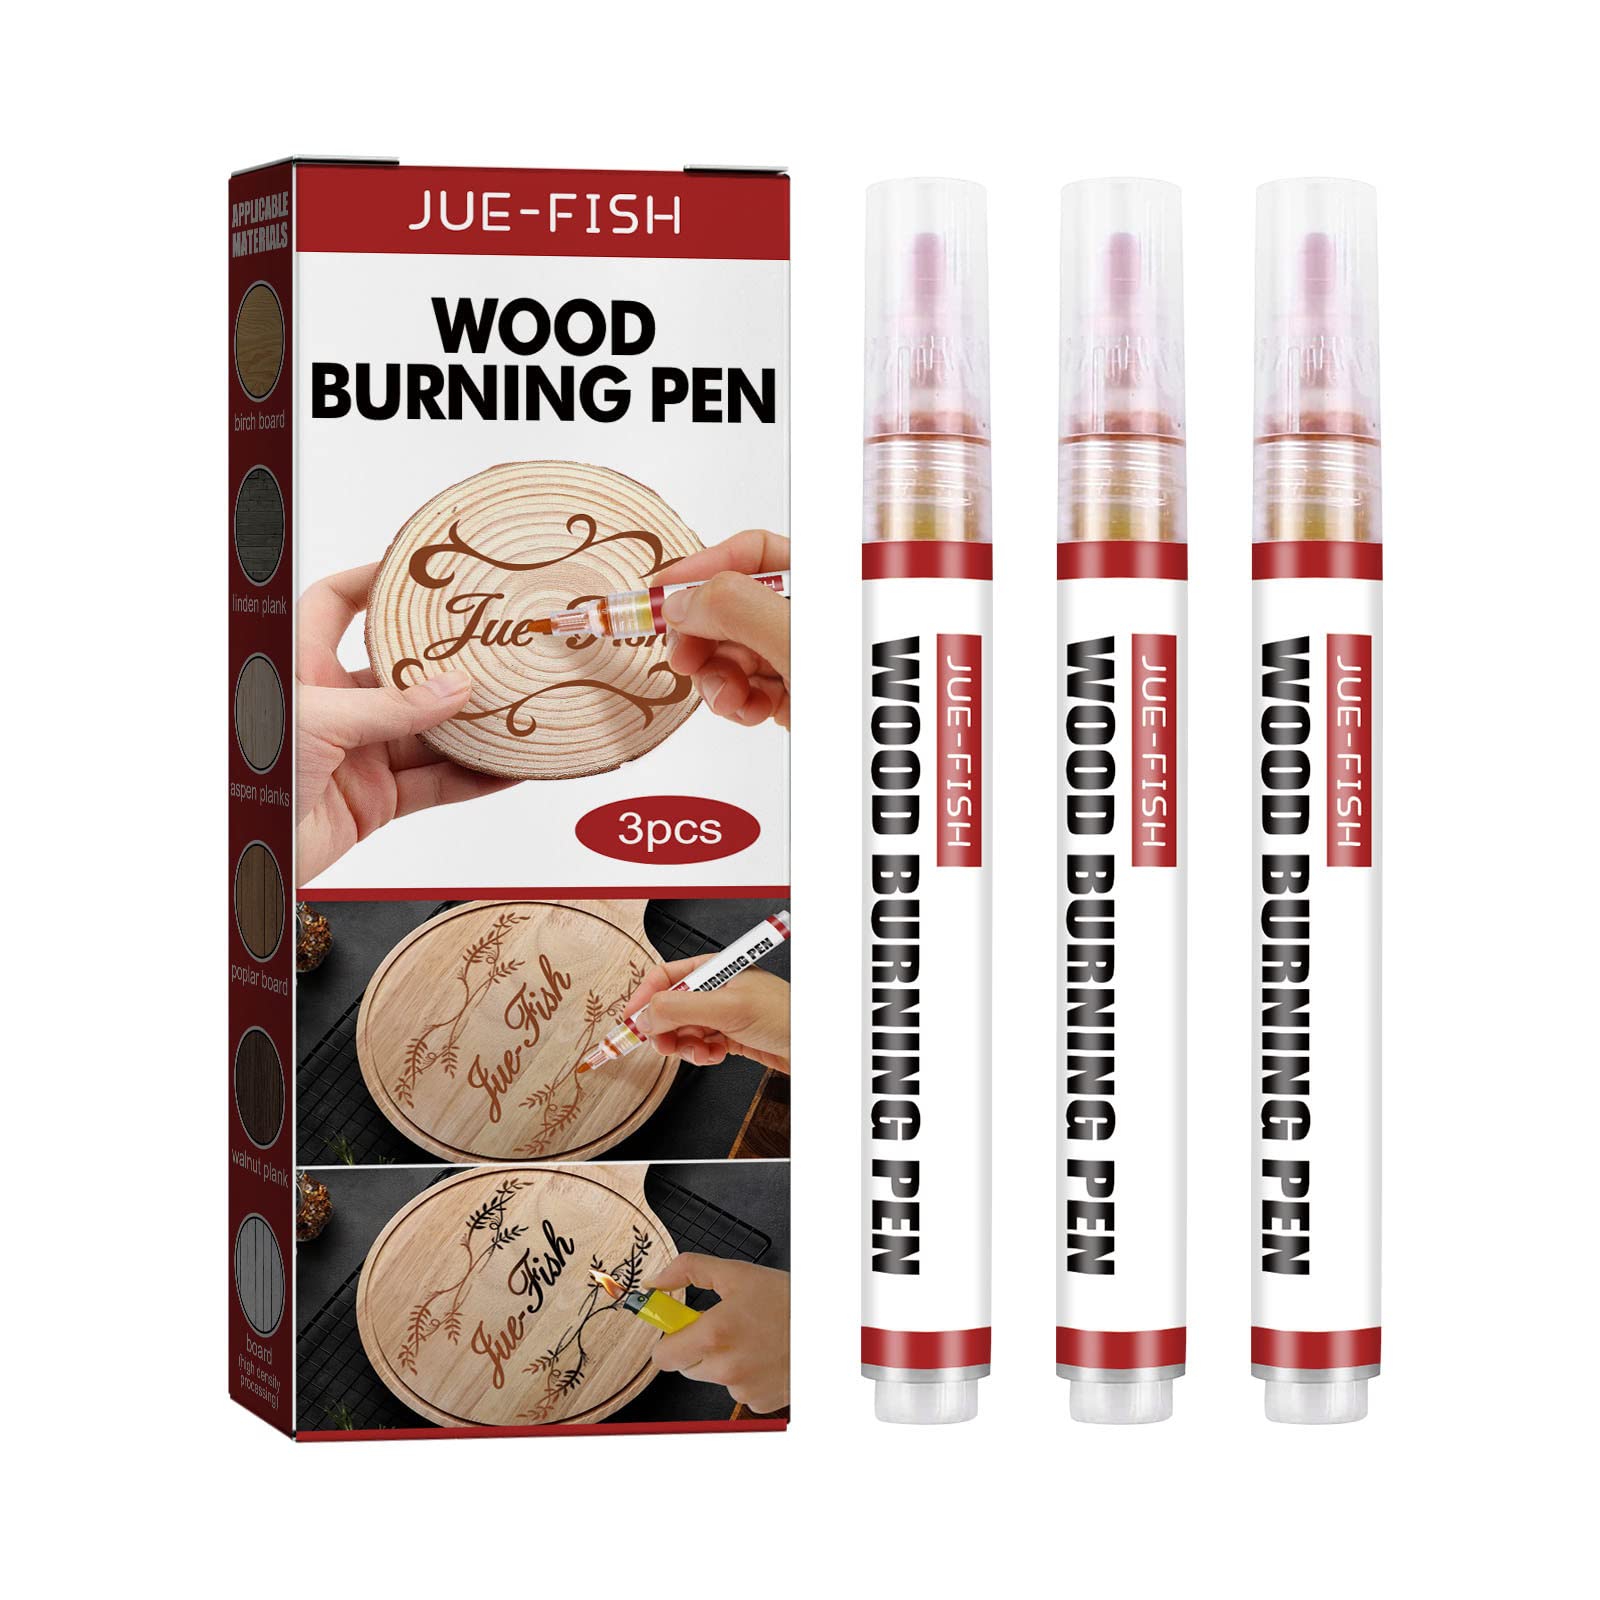 FUMILE Wood Burning Pen Set 9PCS with 3 Scorch Pen Marker, 2 Wood